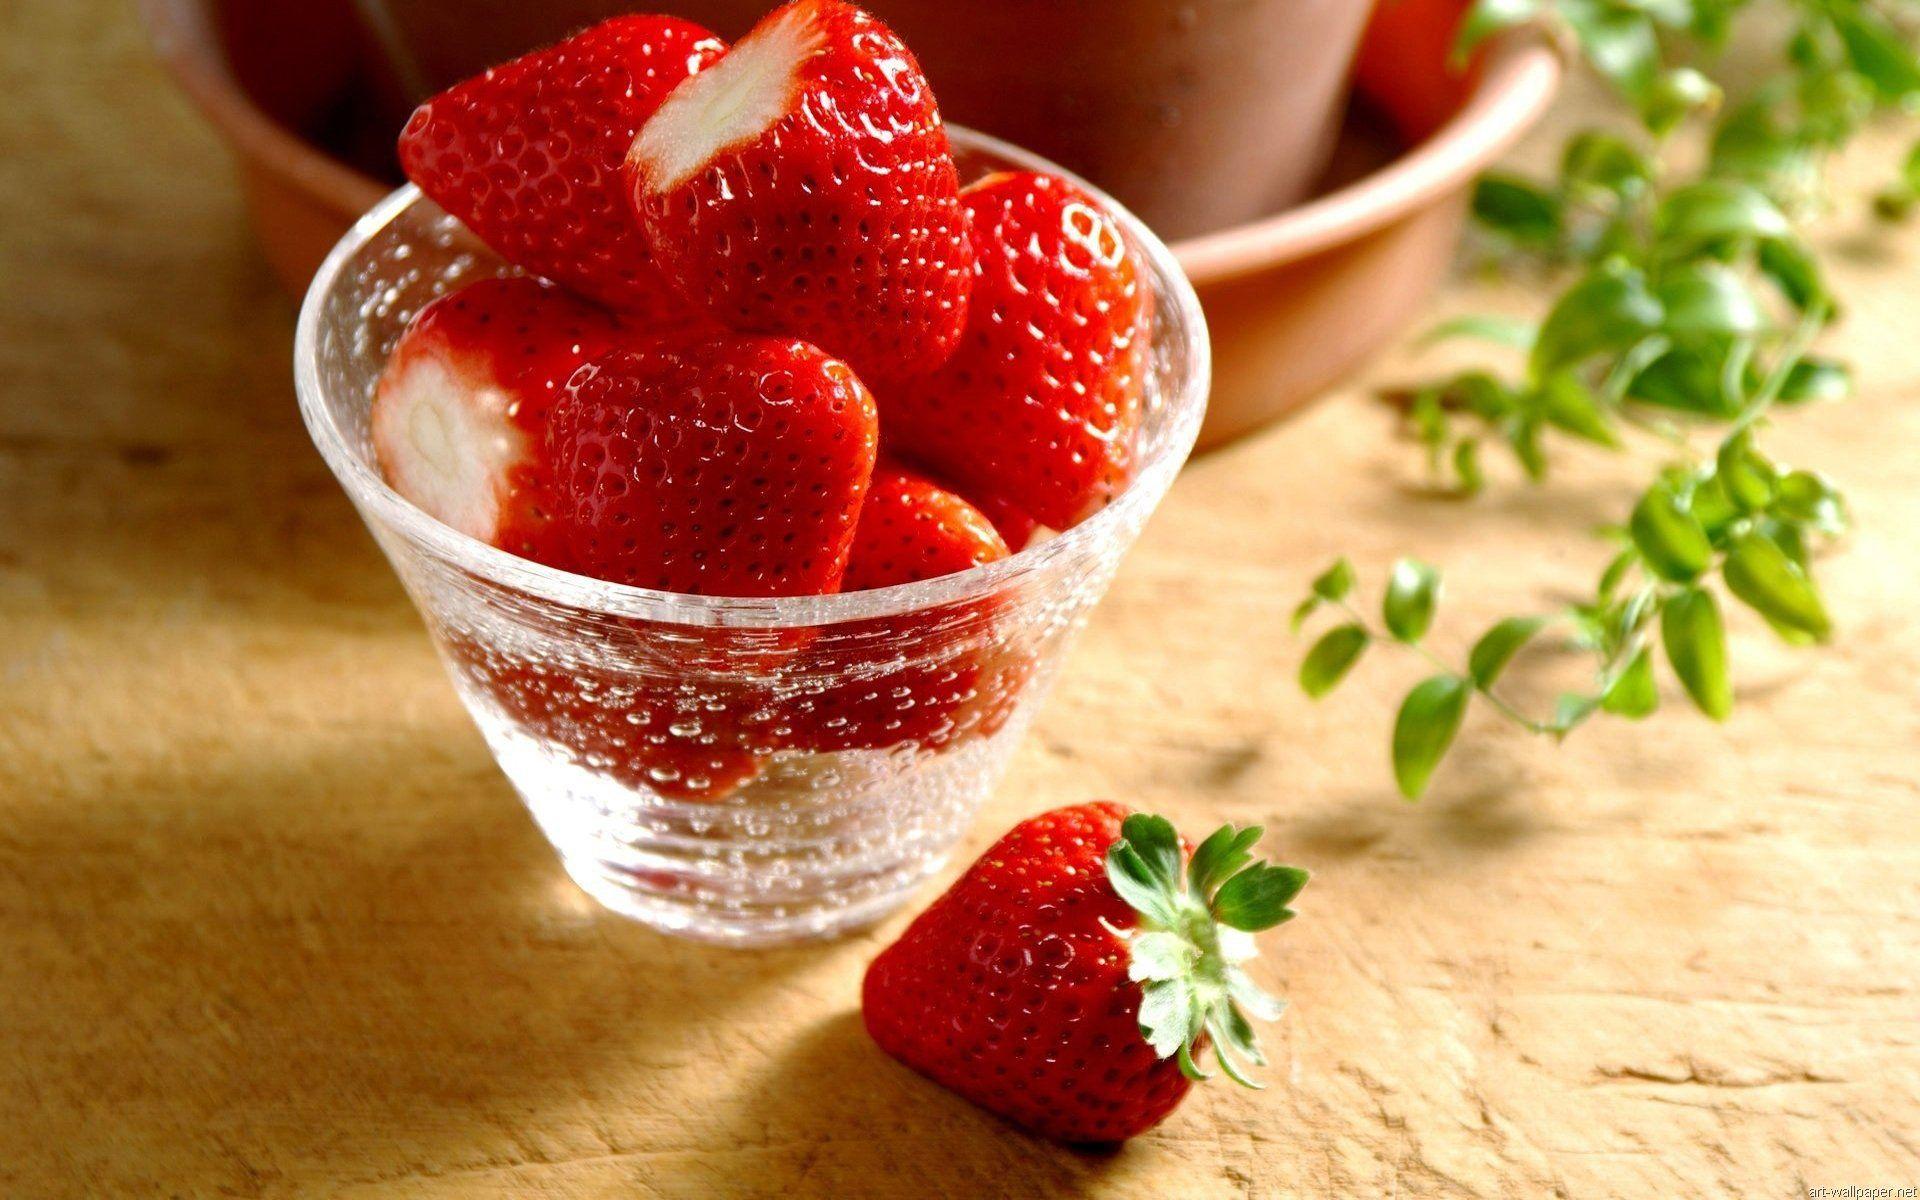 Cute Strawberry